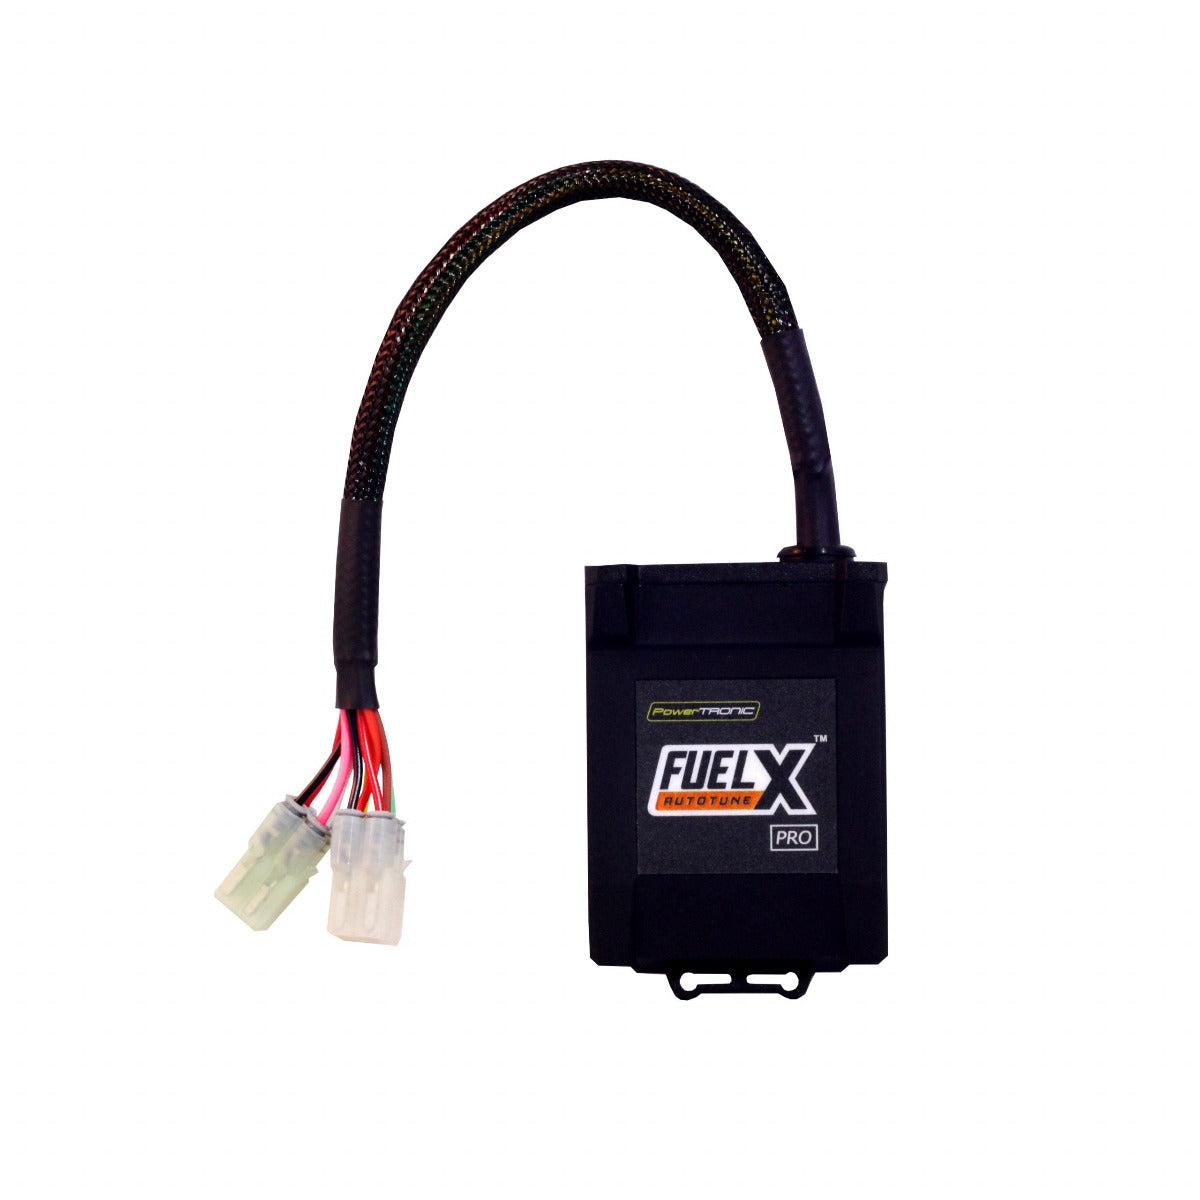 FuelX Autotune Pro Fuel Injection Optimizer for Husqvarna - 1